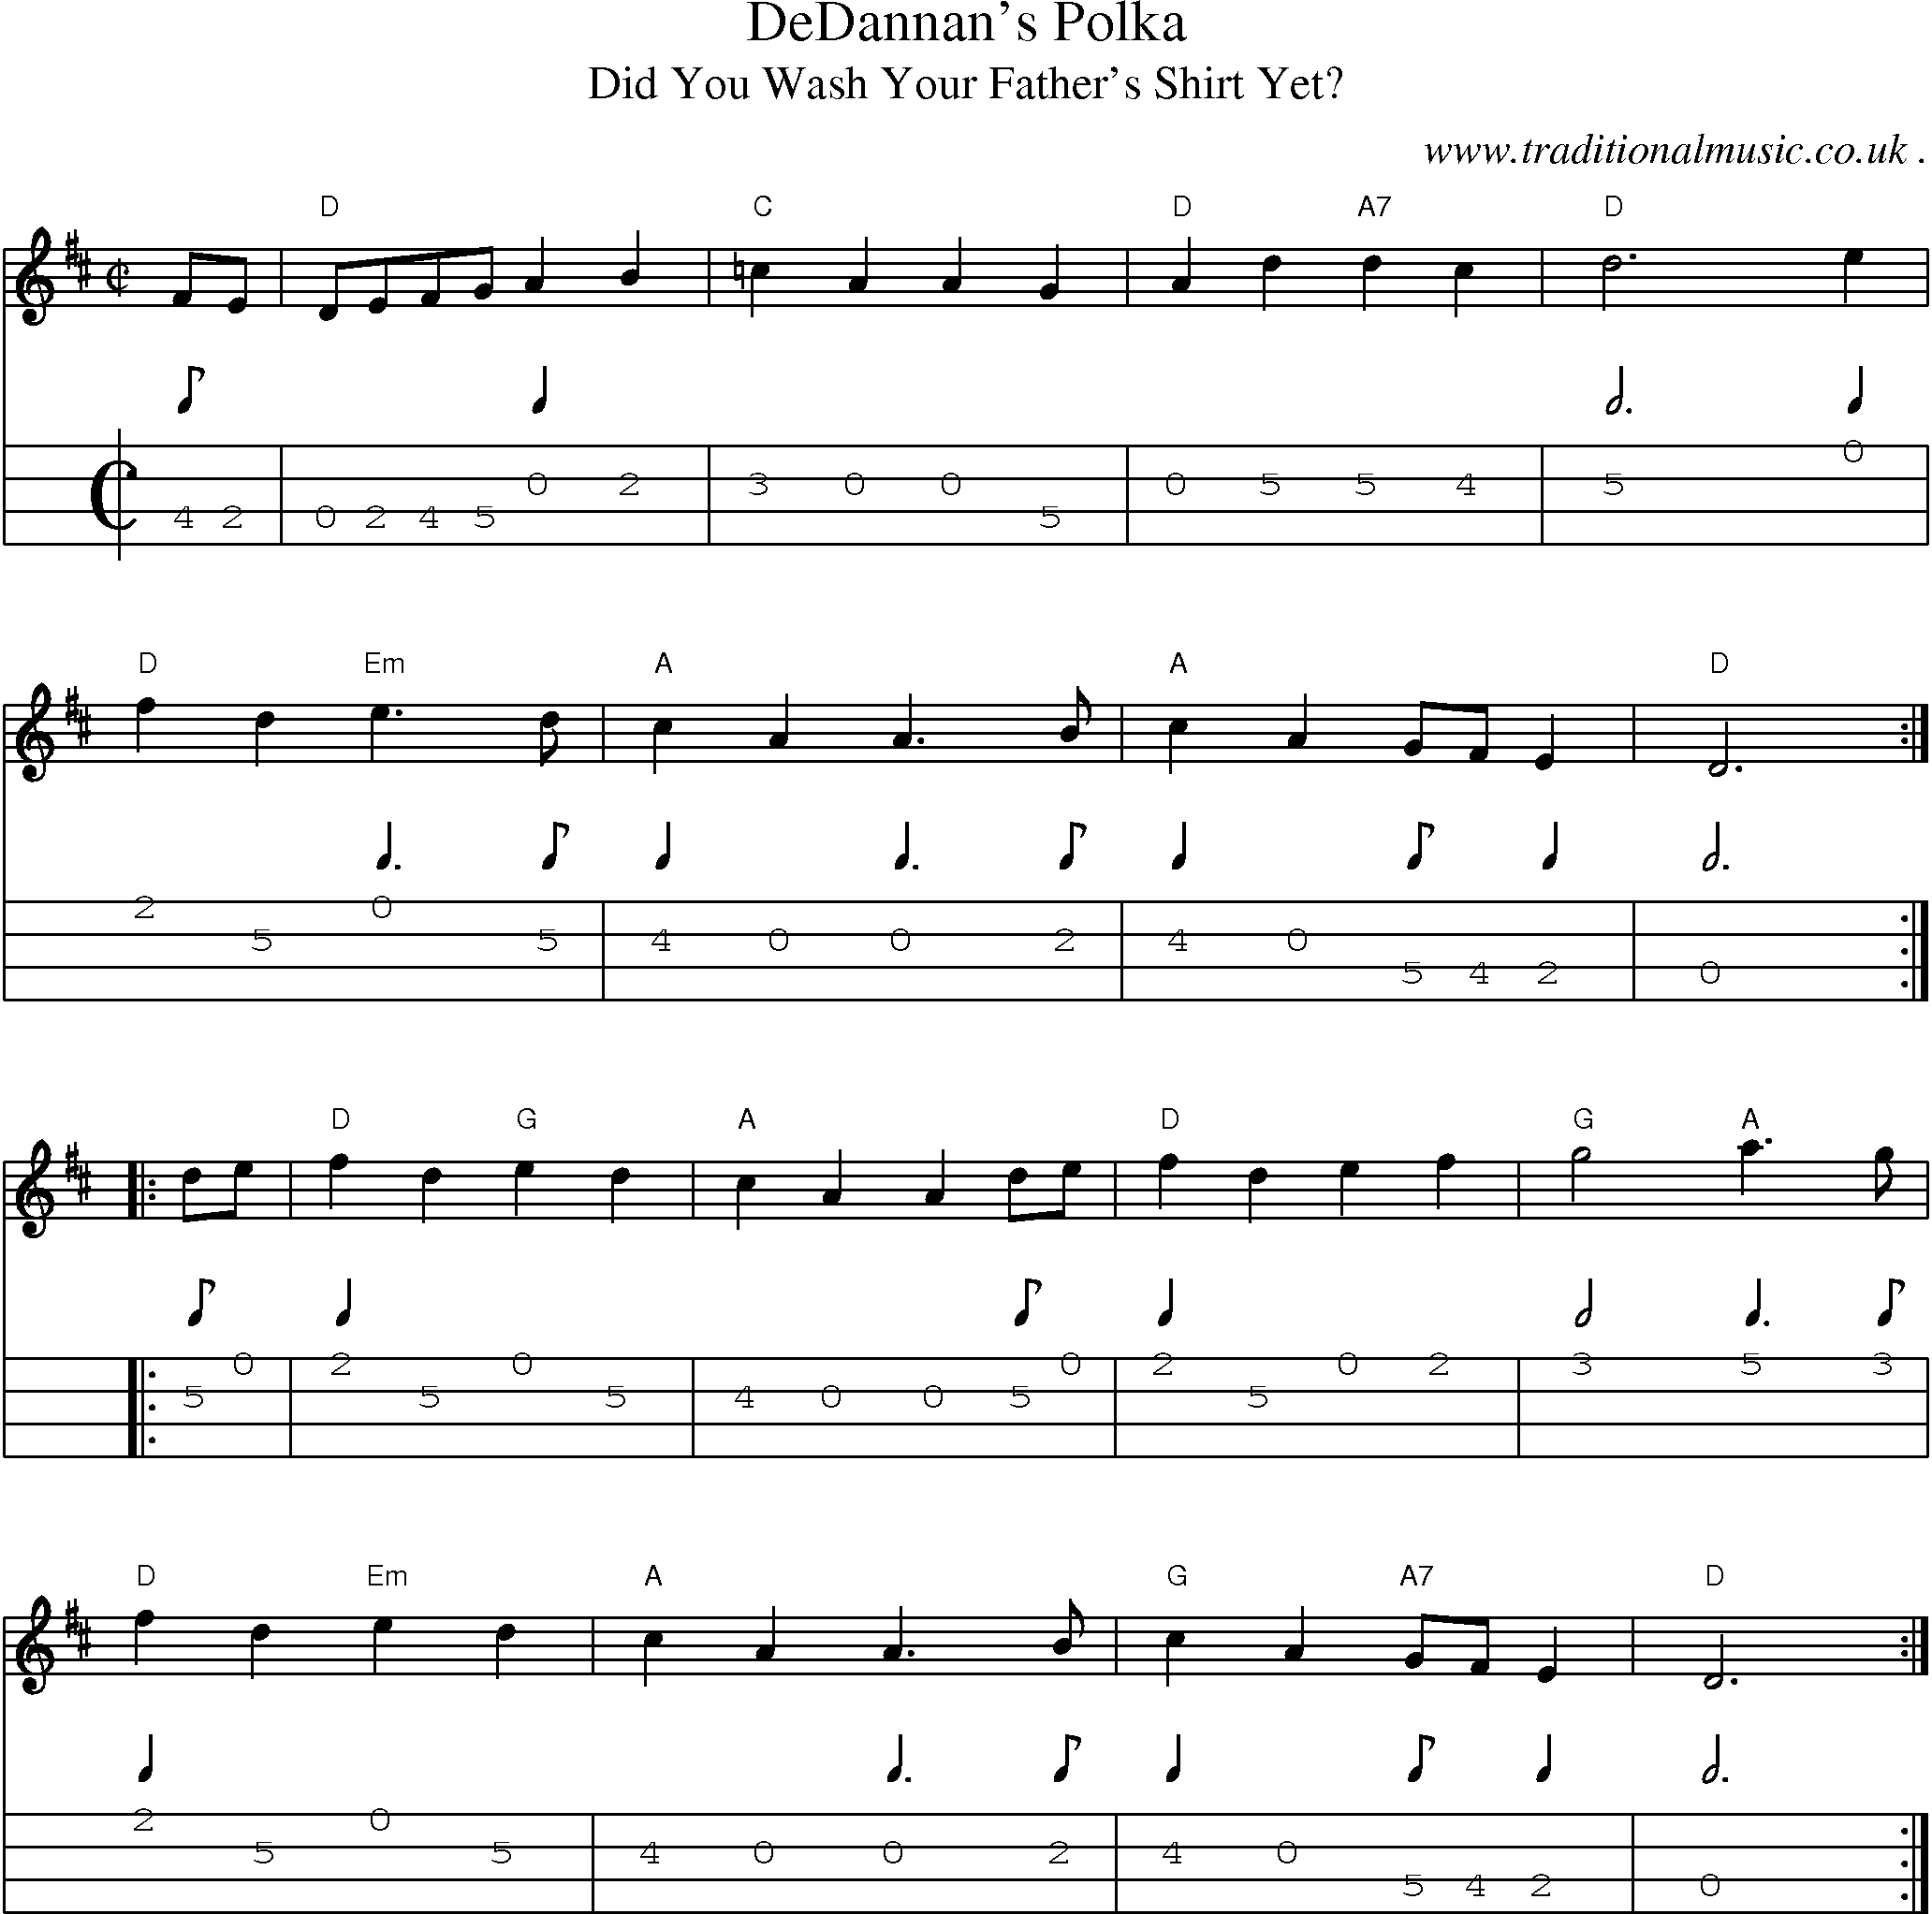 Music Score and Guitar Tabs for Dedannans Polka